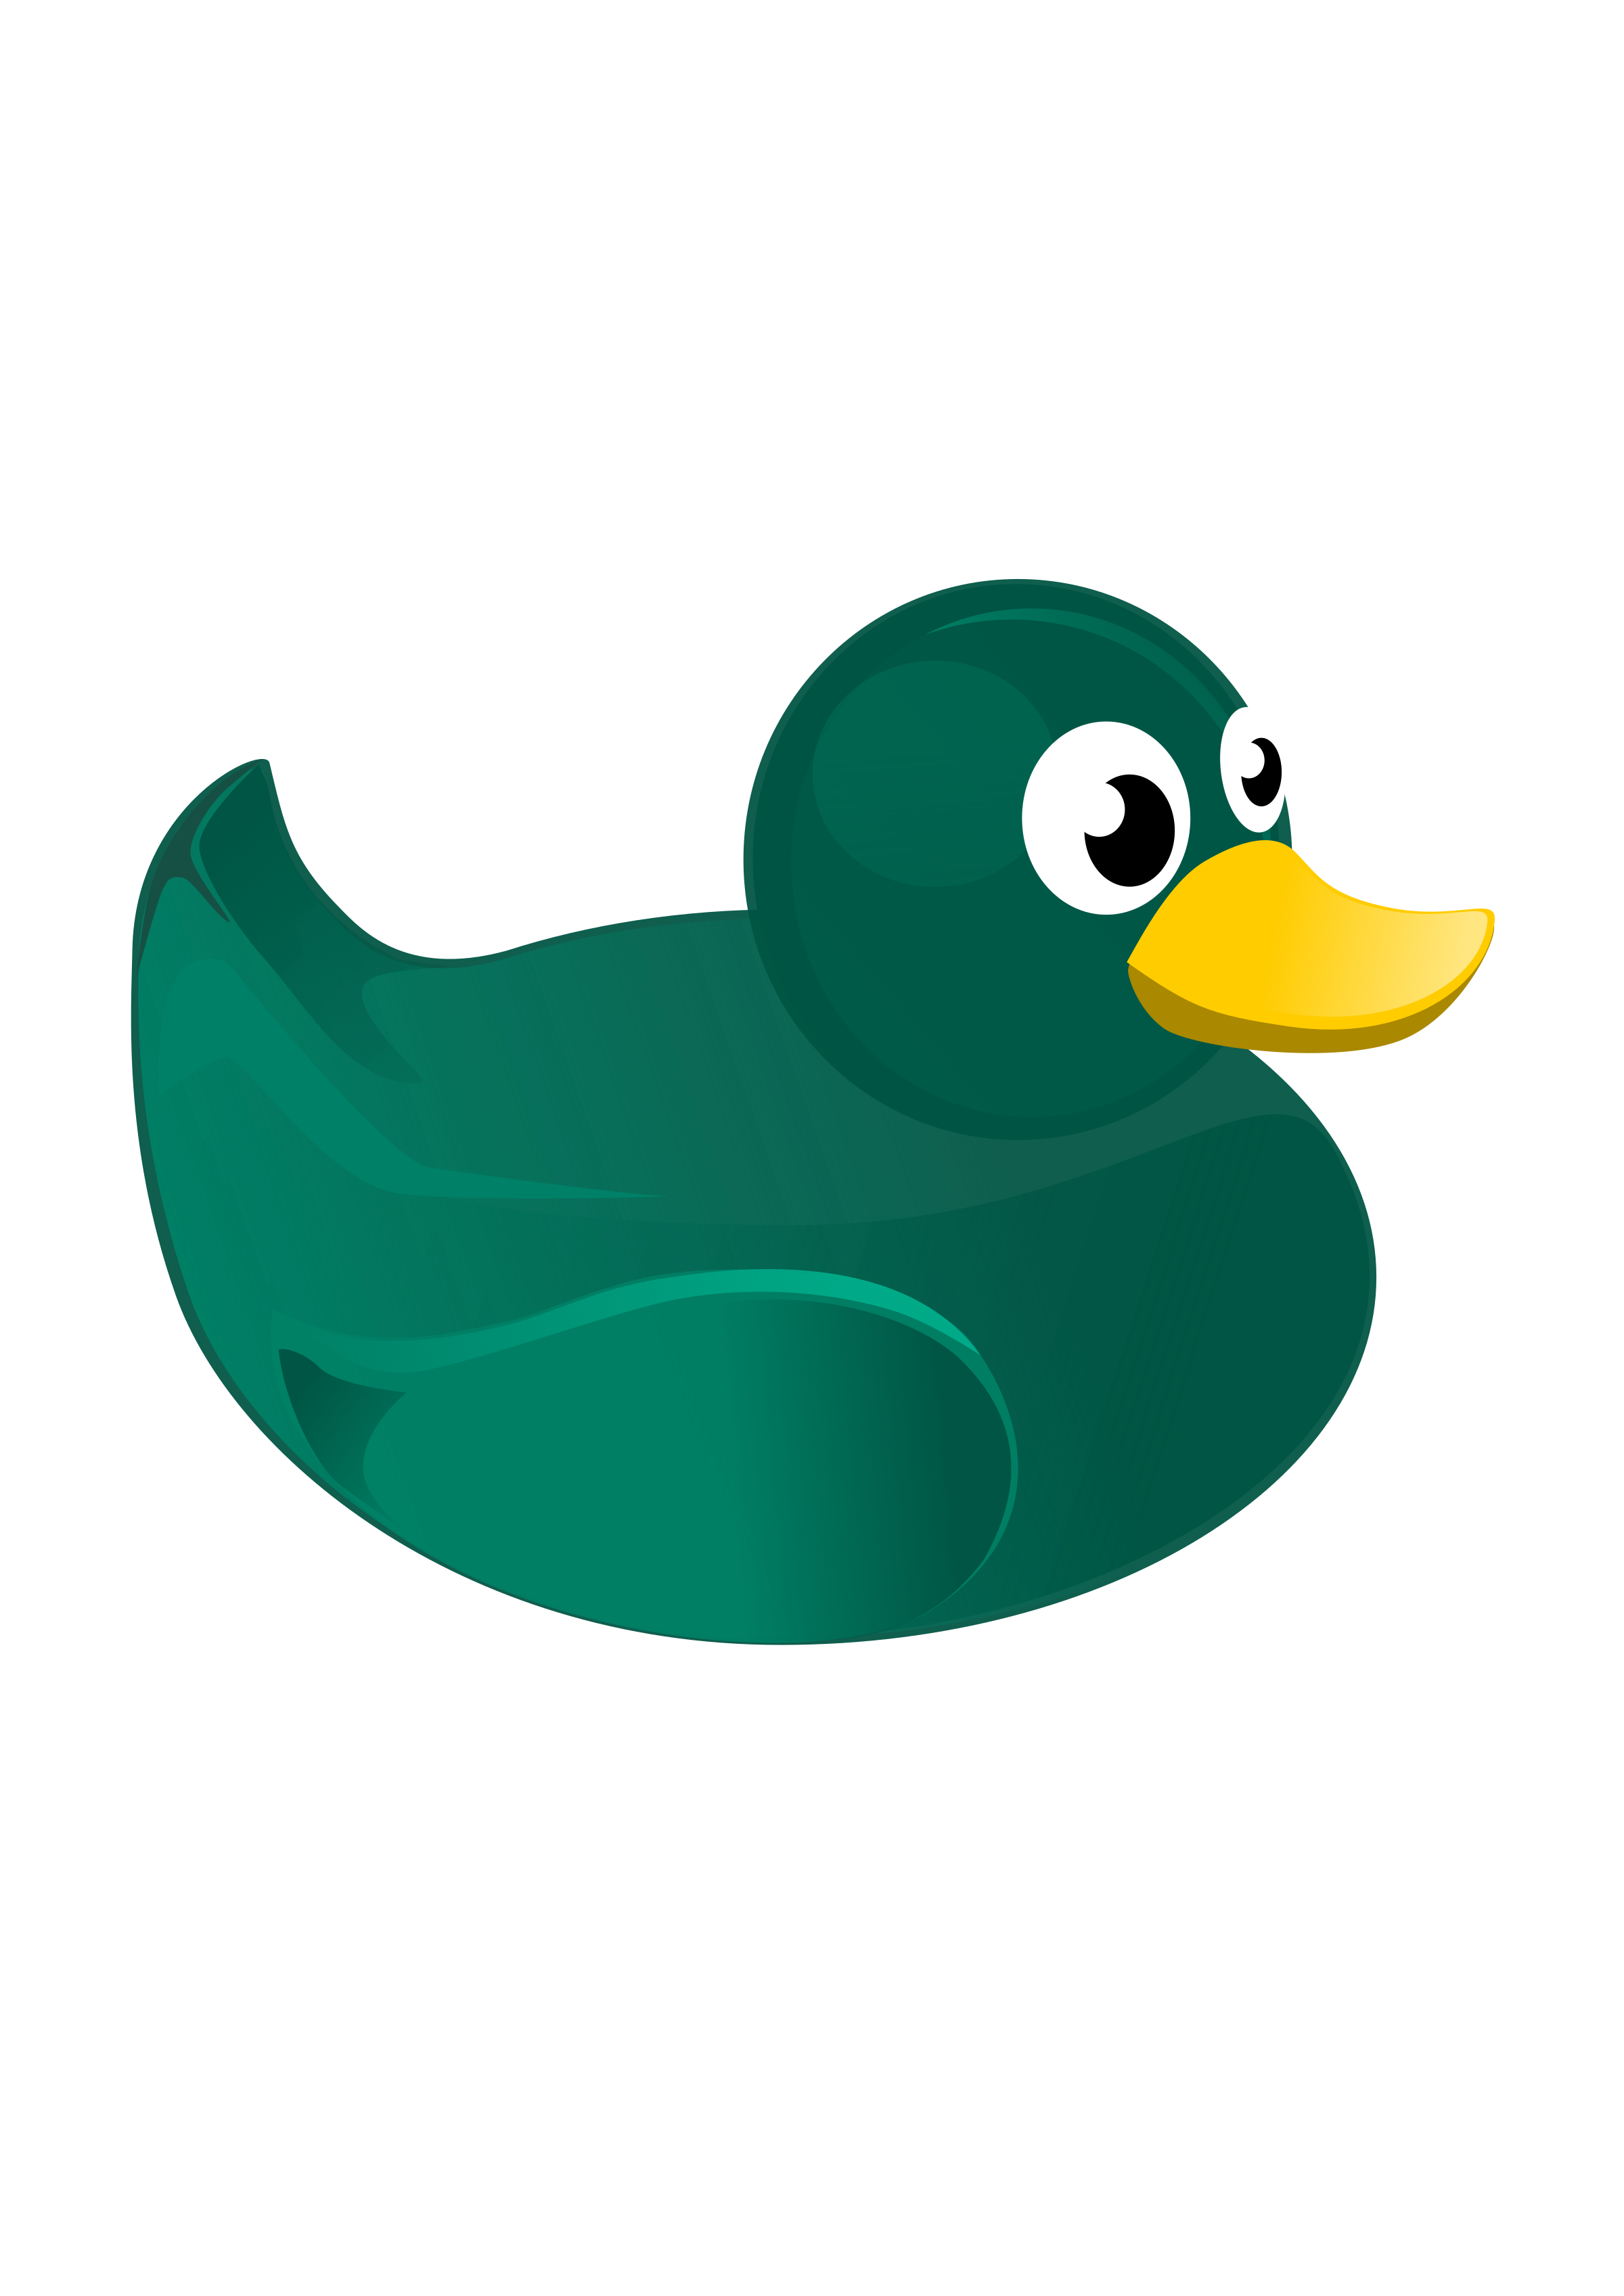 Rubber Duck SVG Clip arts